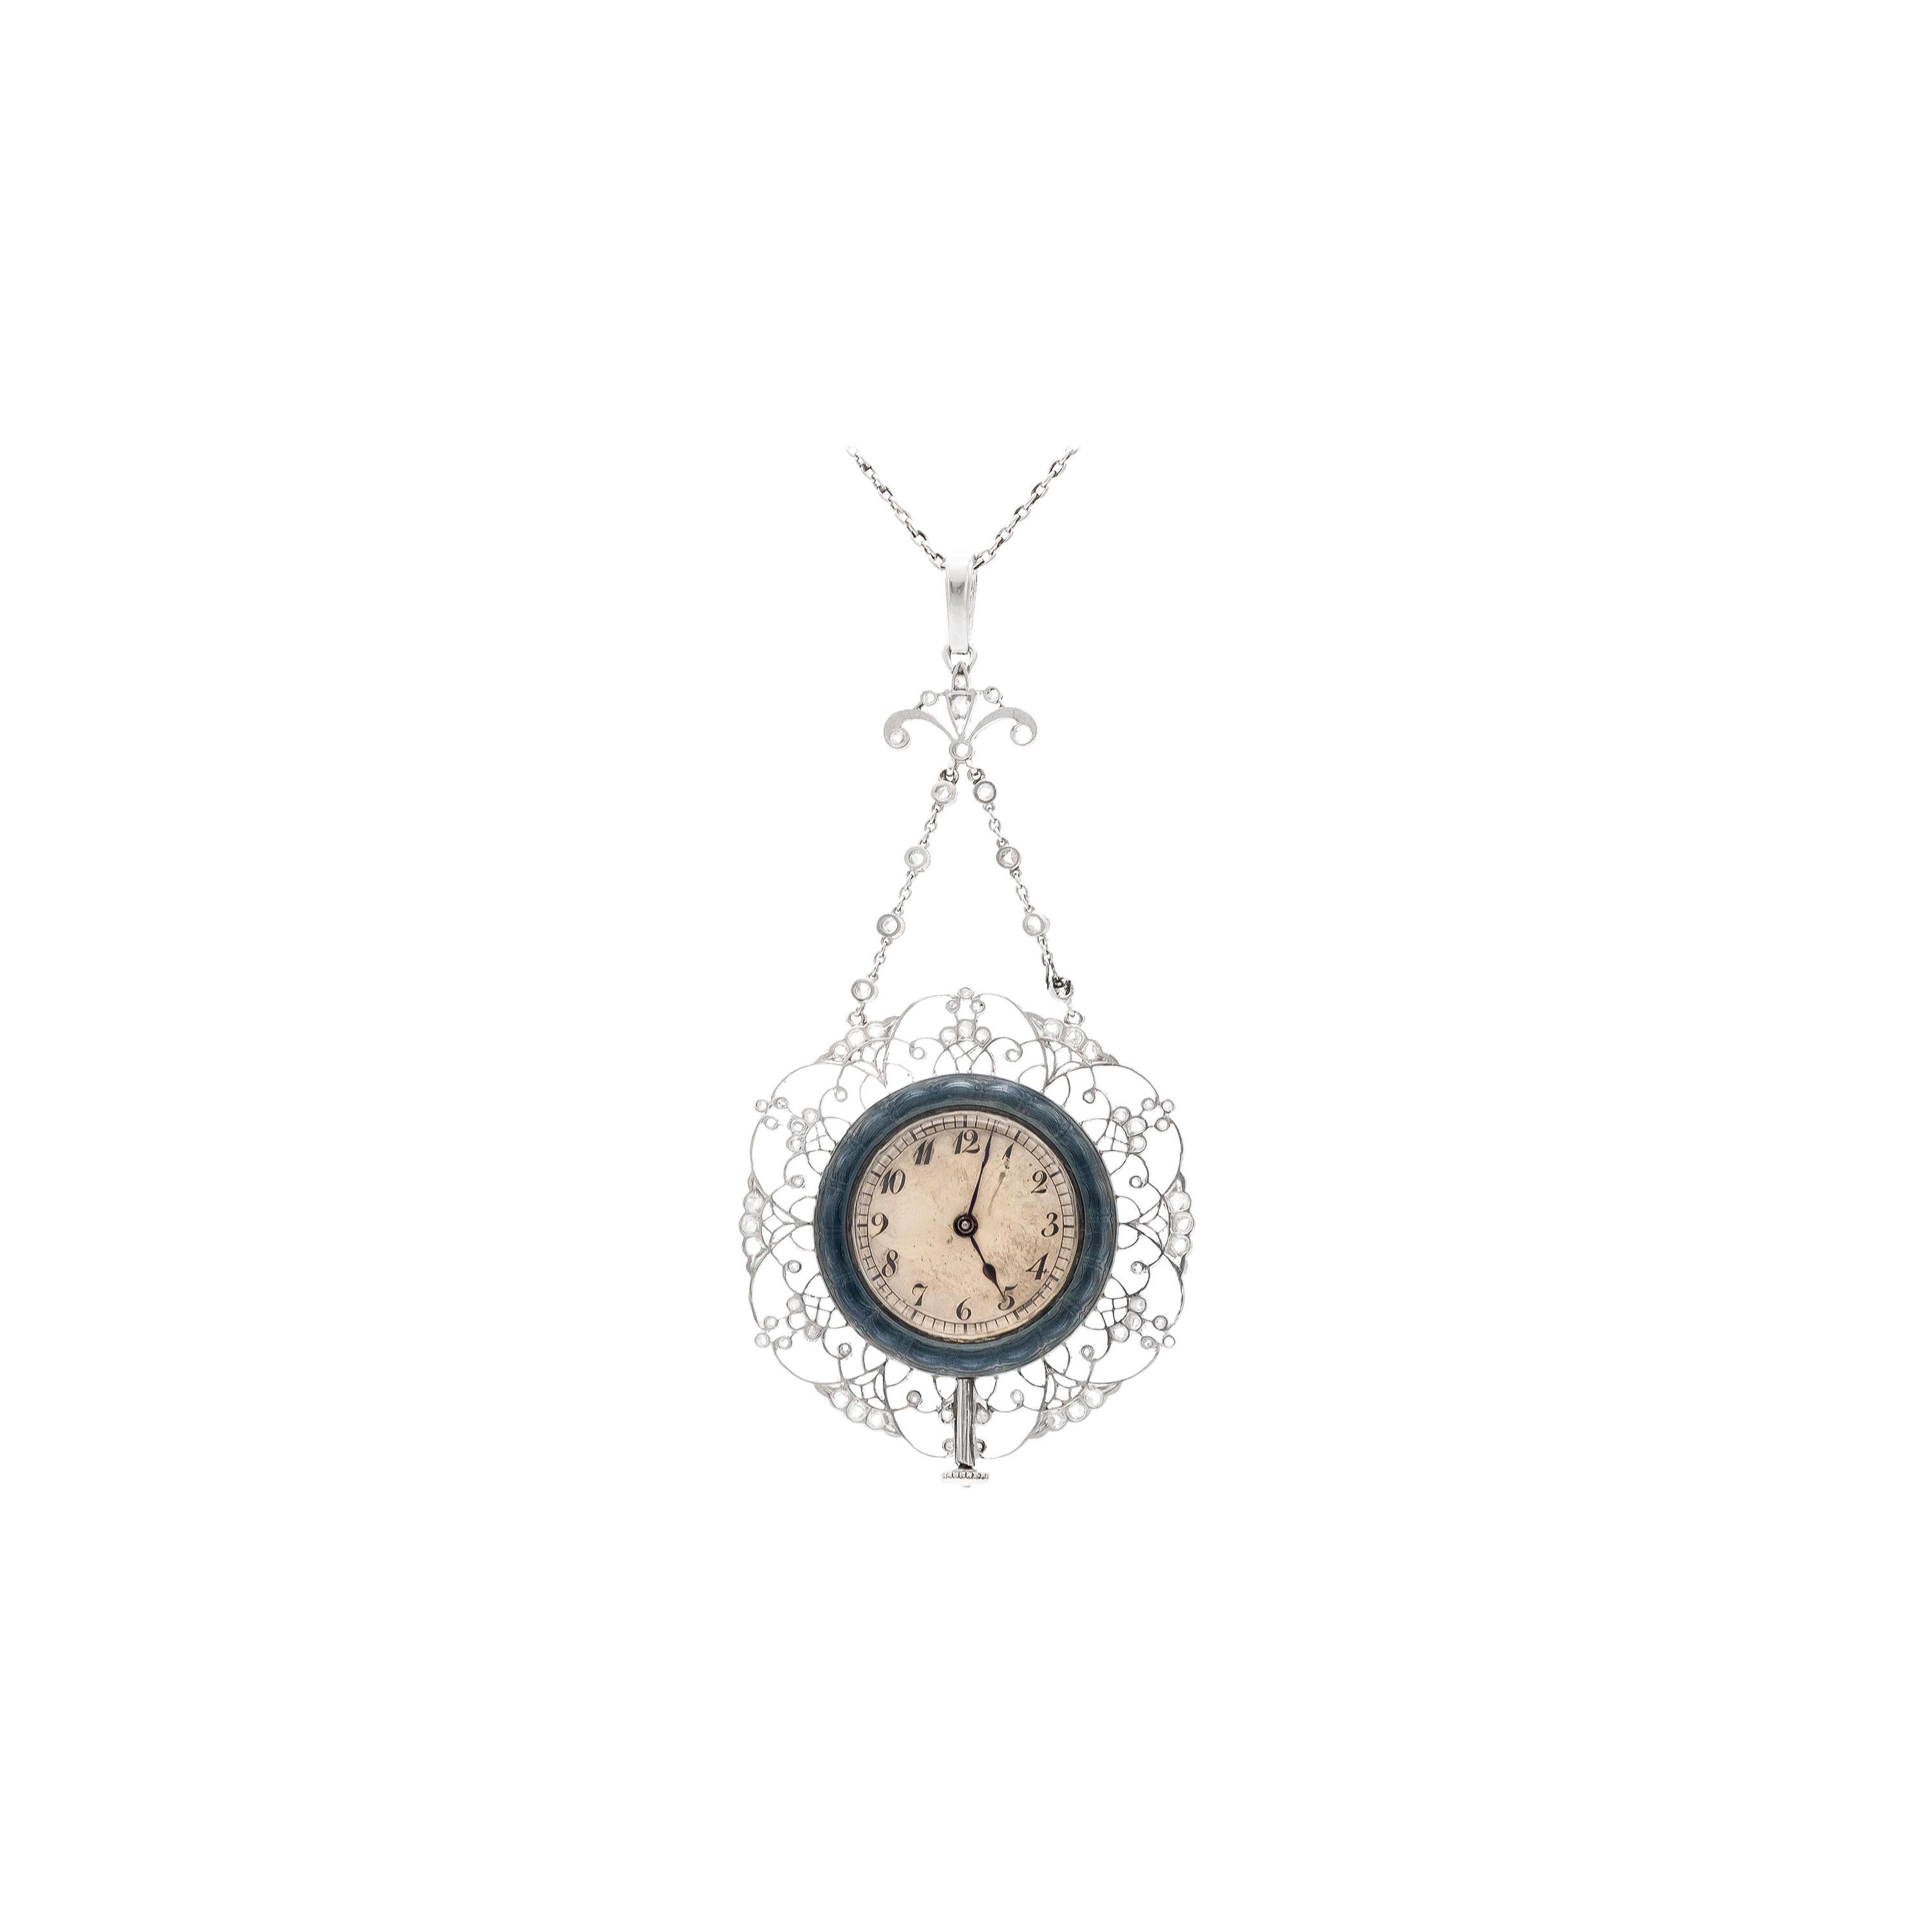 Edwardian Pendant Watch Necklace with Blue Enamel and Diamonds